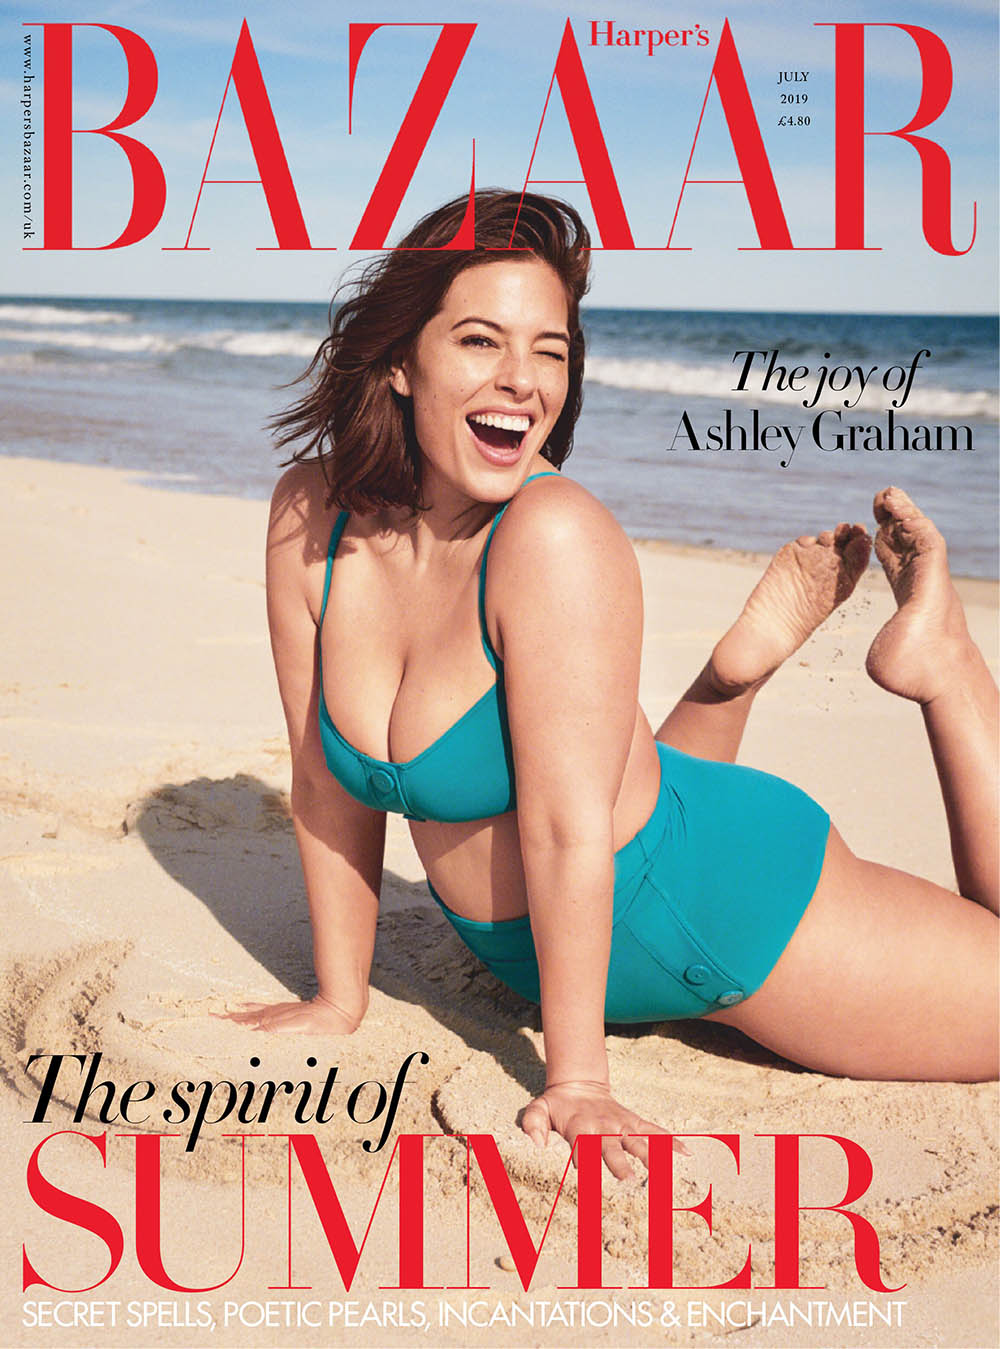 Ashley Graham covers Harper’s Bazaar UK July 2019 by Pamela Hanson